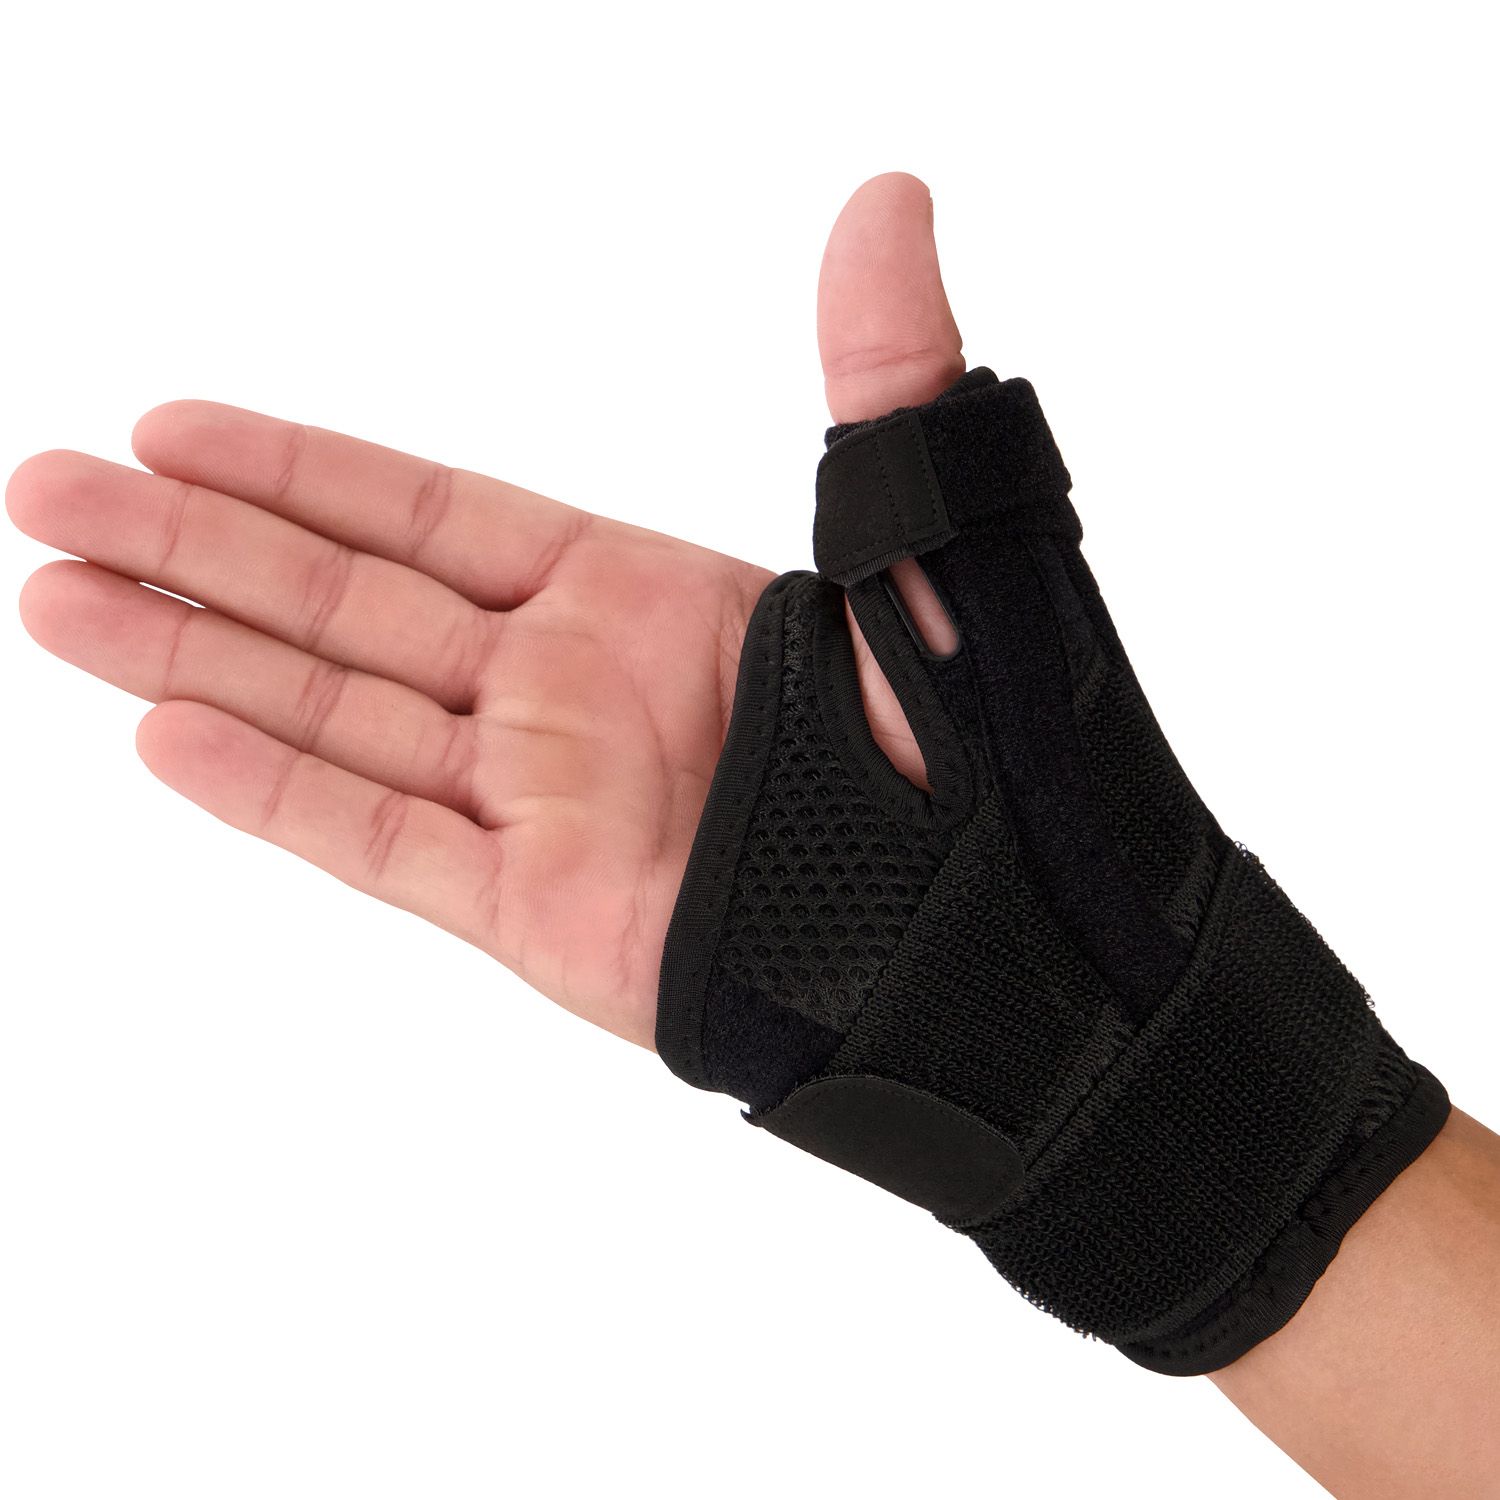 dunimed premium thumb wrist support